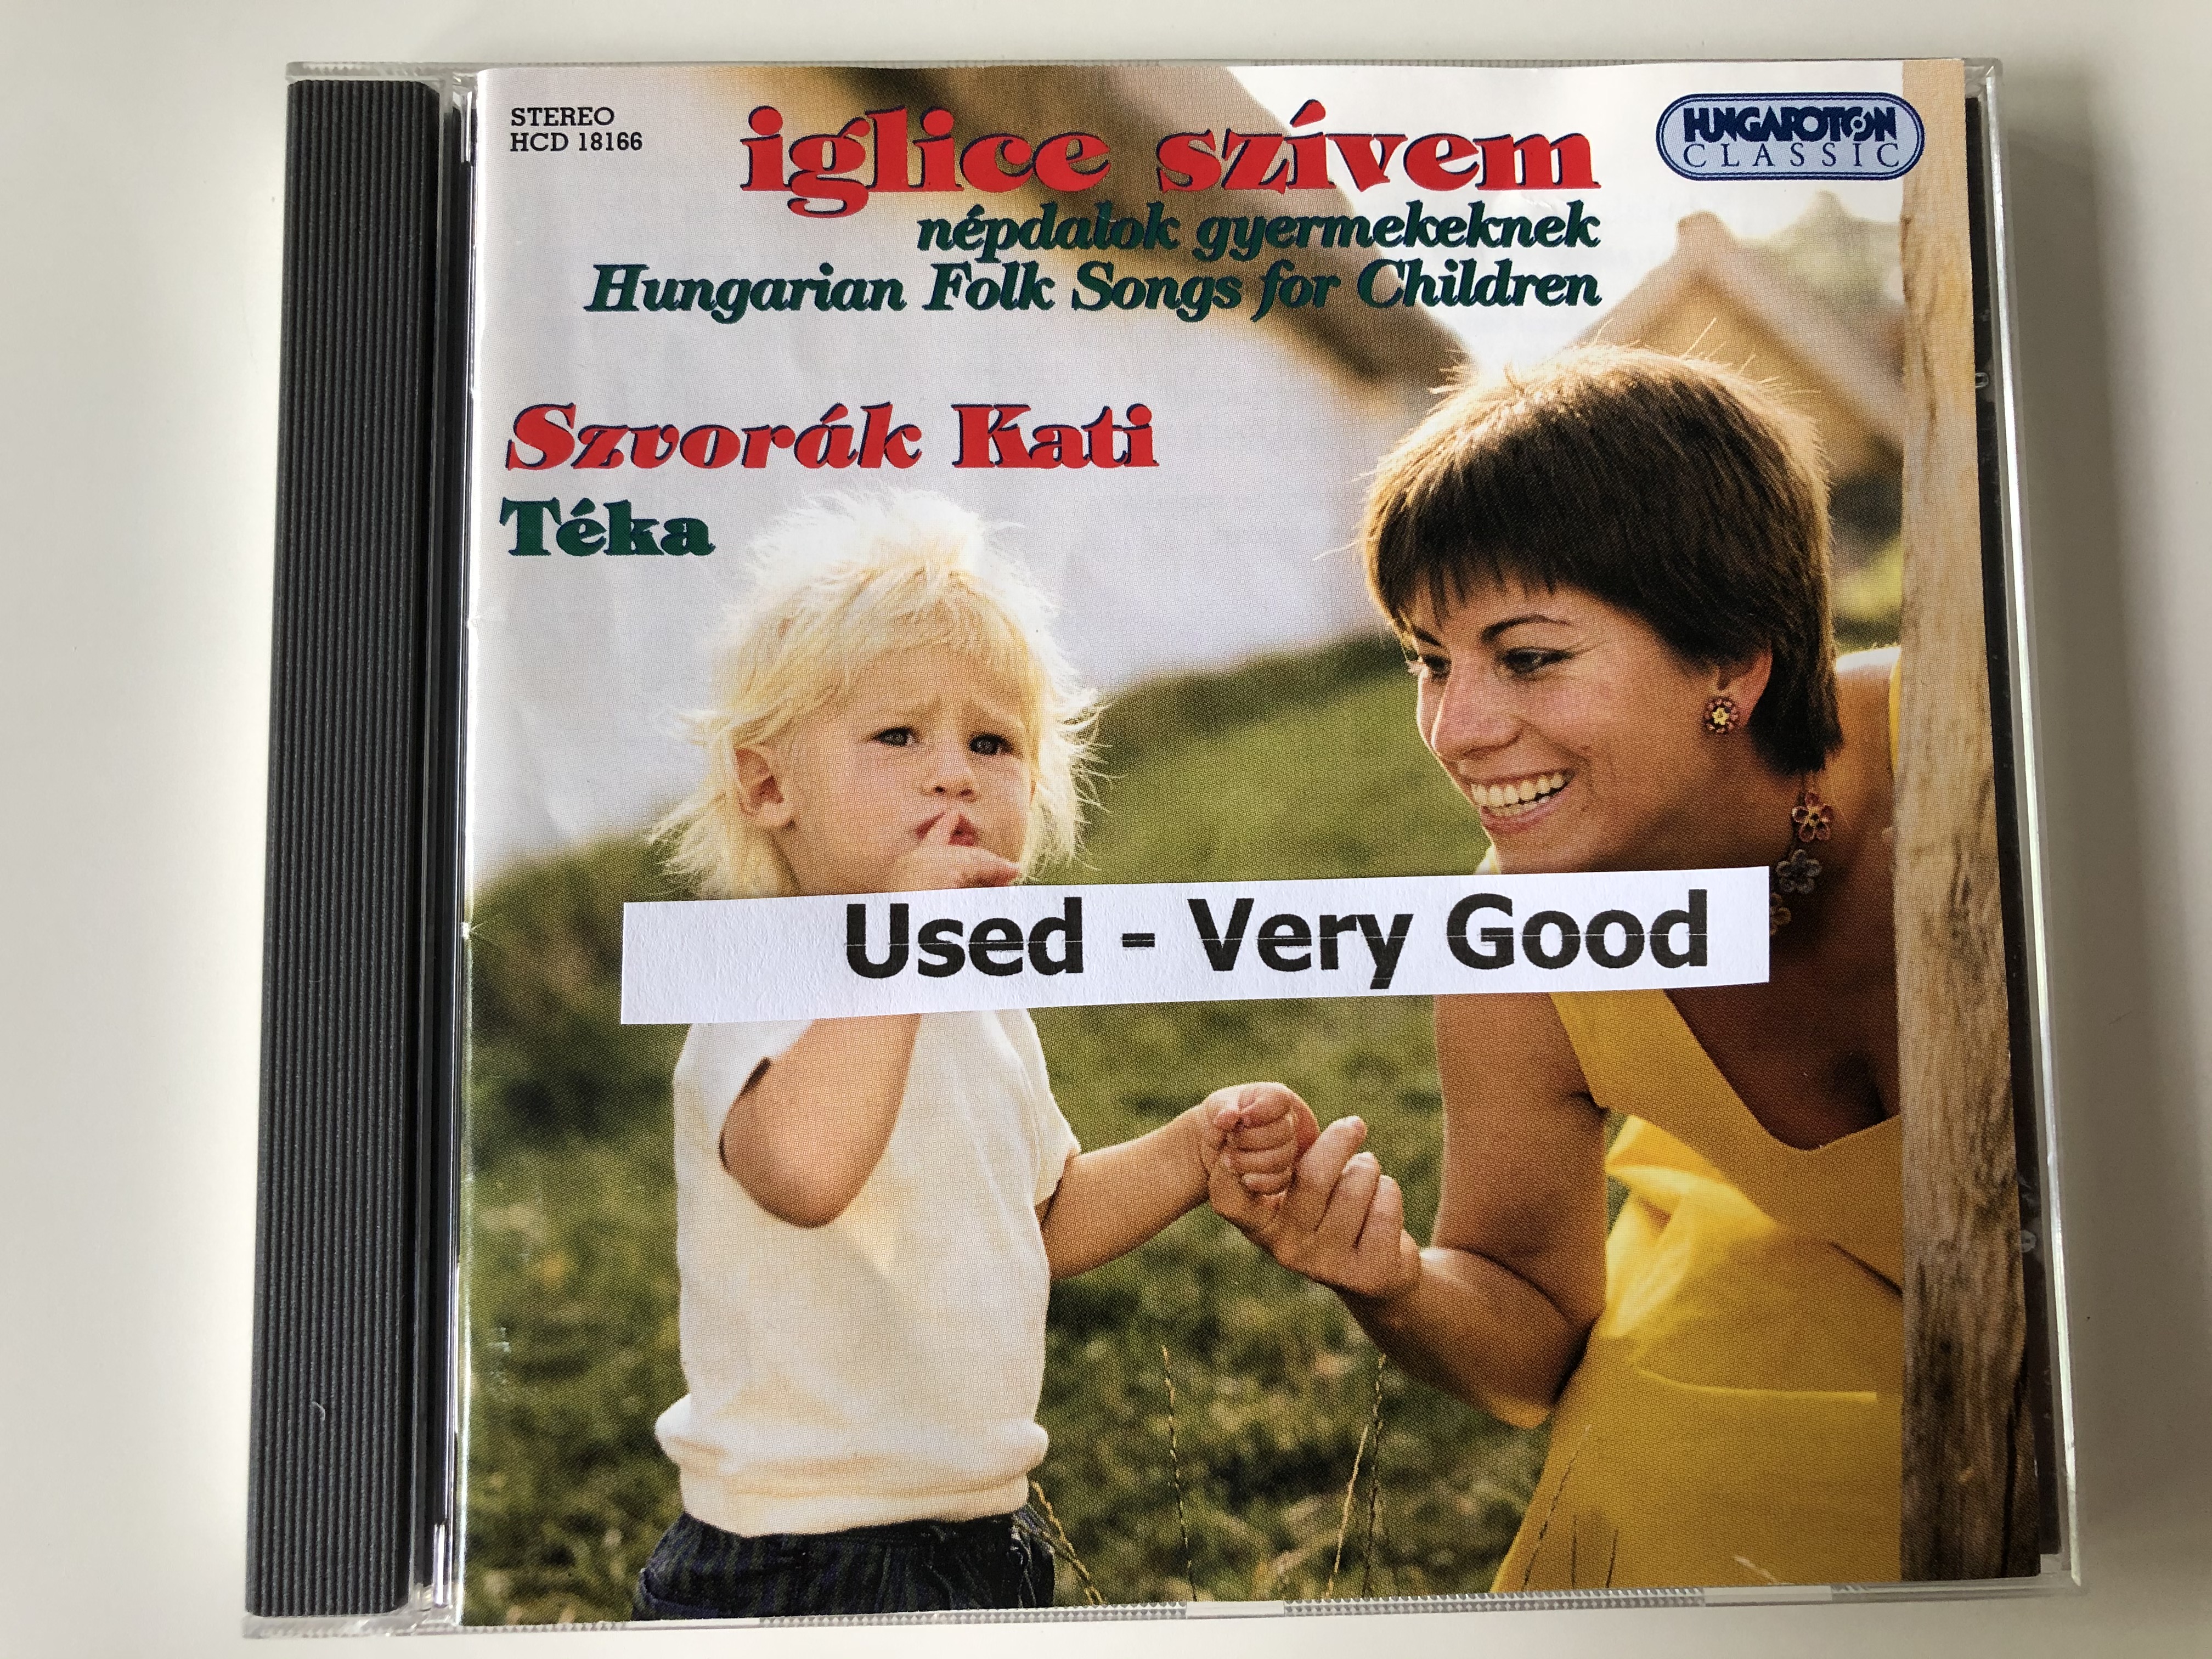 iglice-sz-vem-n-pdalok-gyerekeknek-hungarian-folk-songs-for-children-szvor-k-kati-t-ka-hungaroton-classic-audio-cd-2000-stereo-hcd-18166-2-.jpg